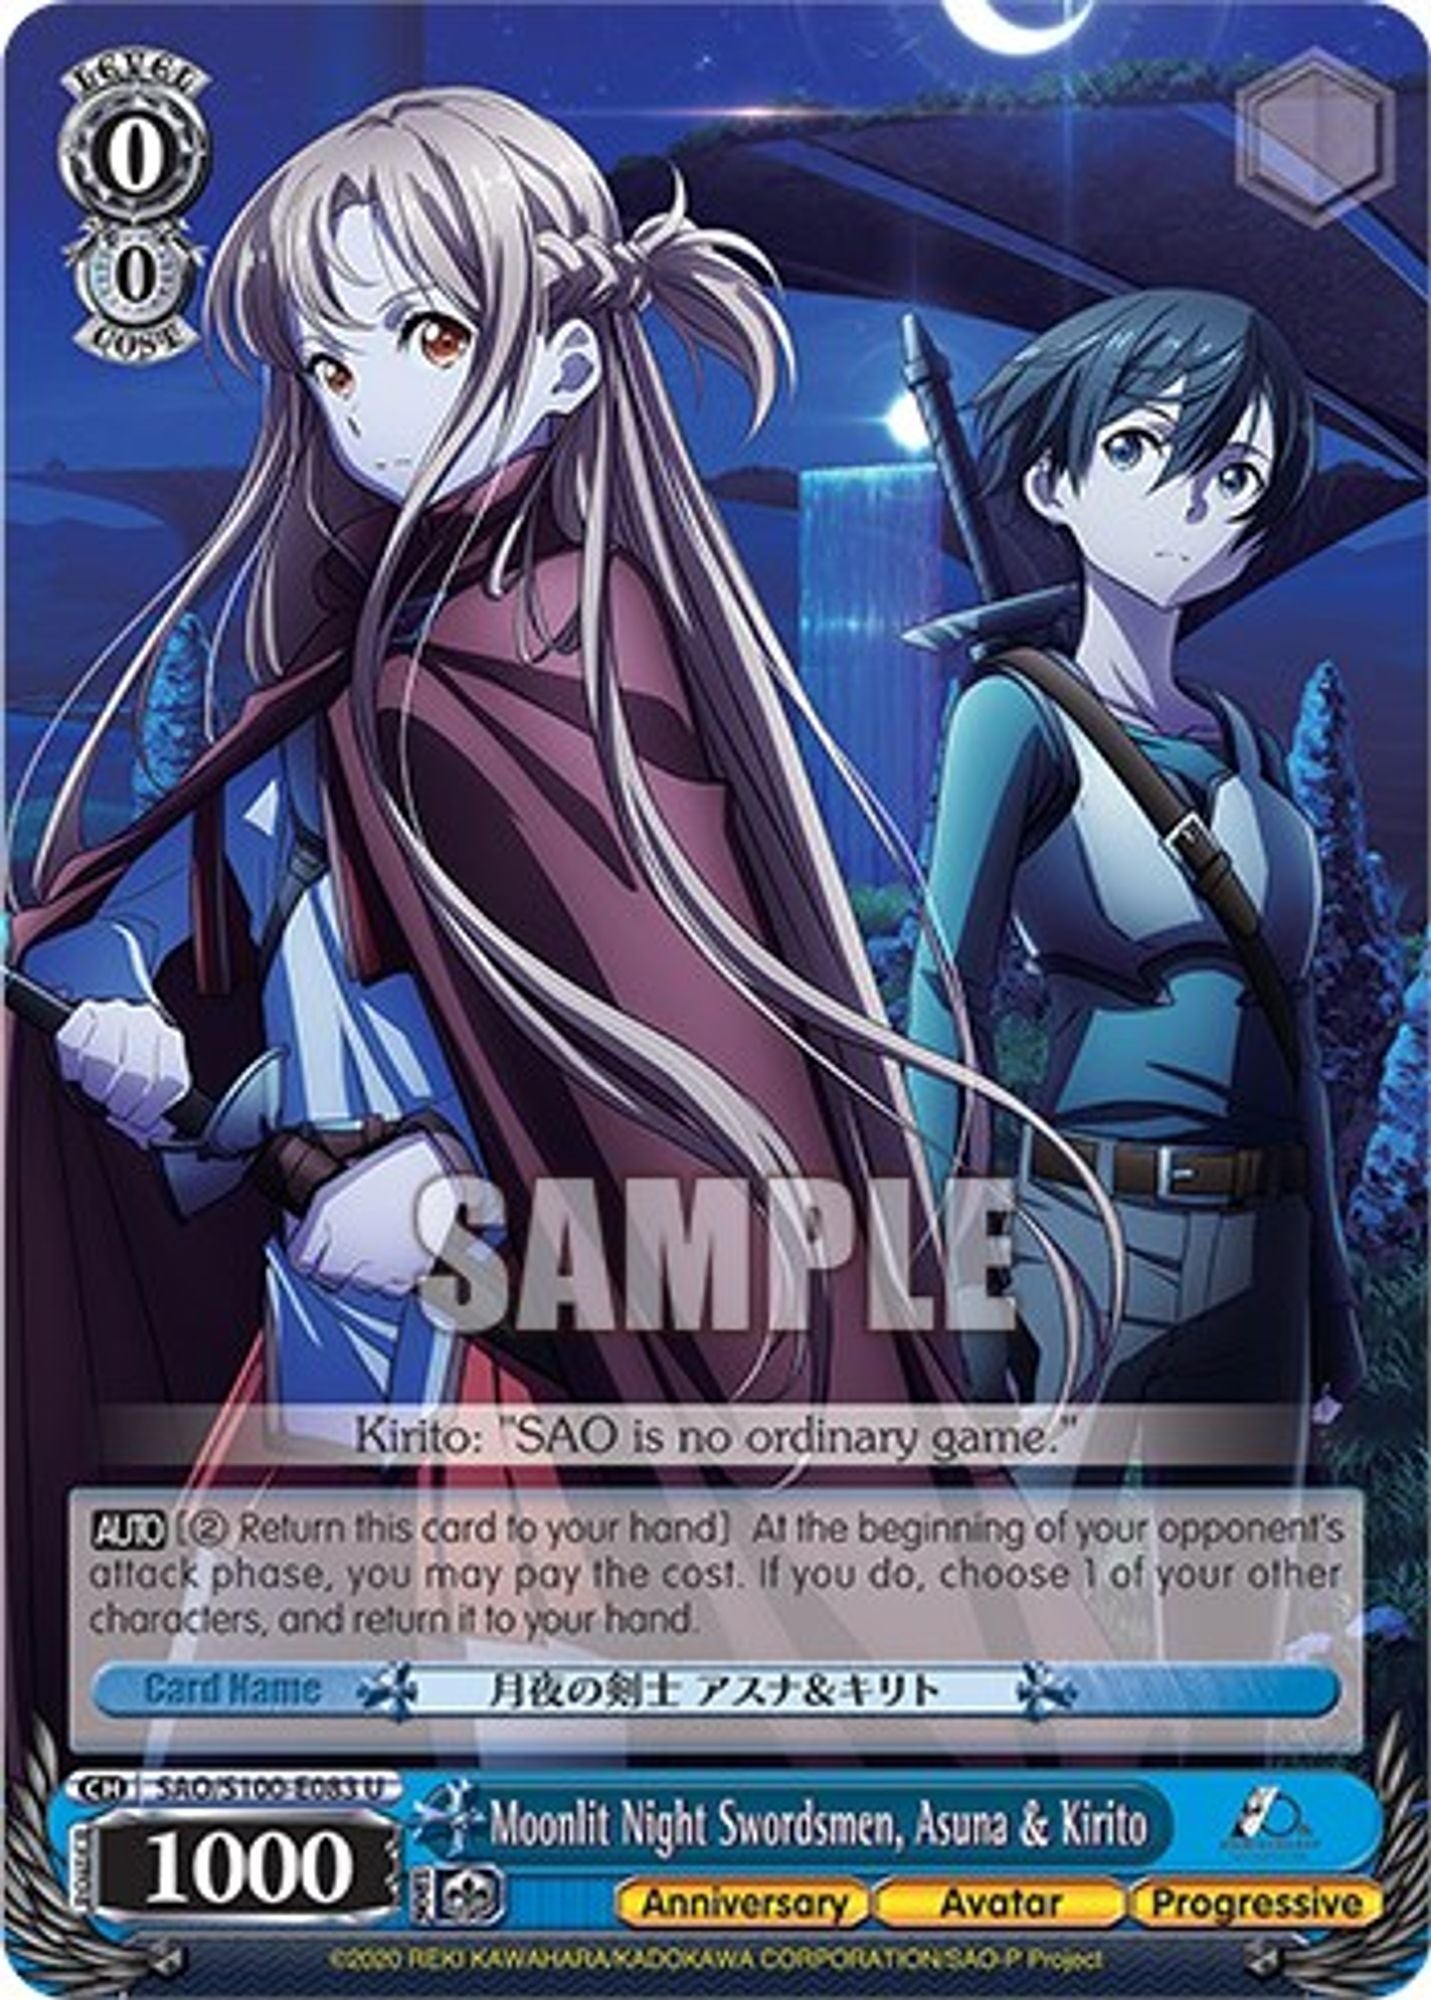 Moonlit Night Swordsmen, Asuna & Kirito